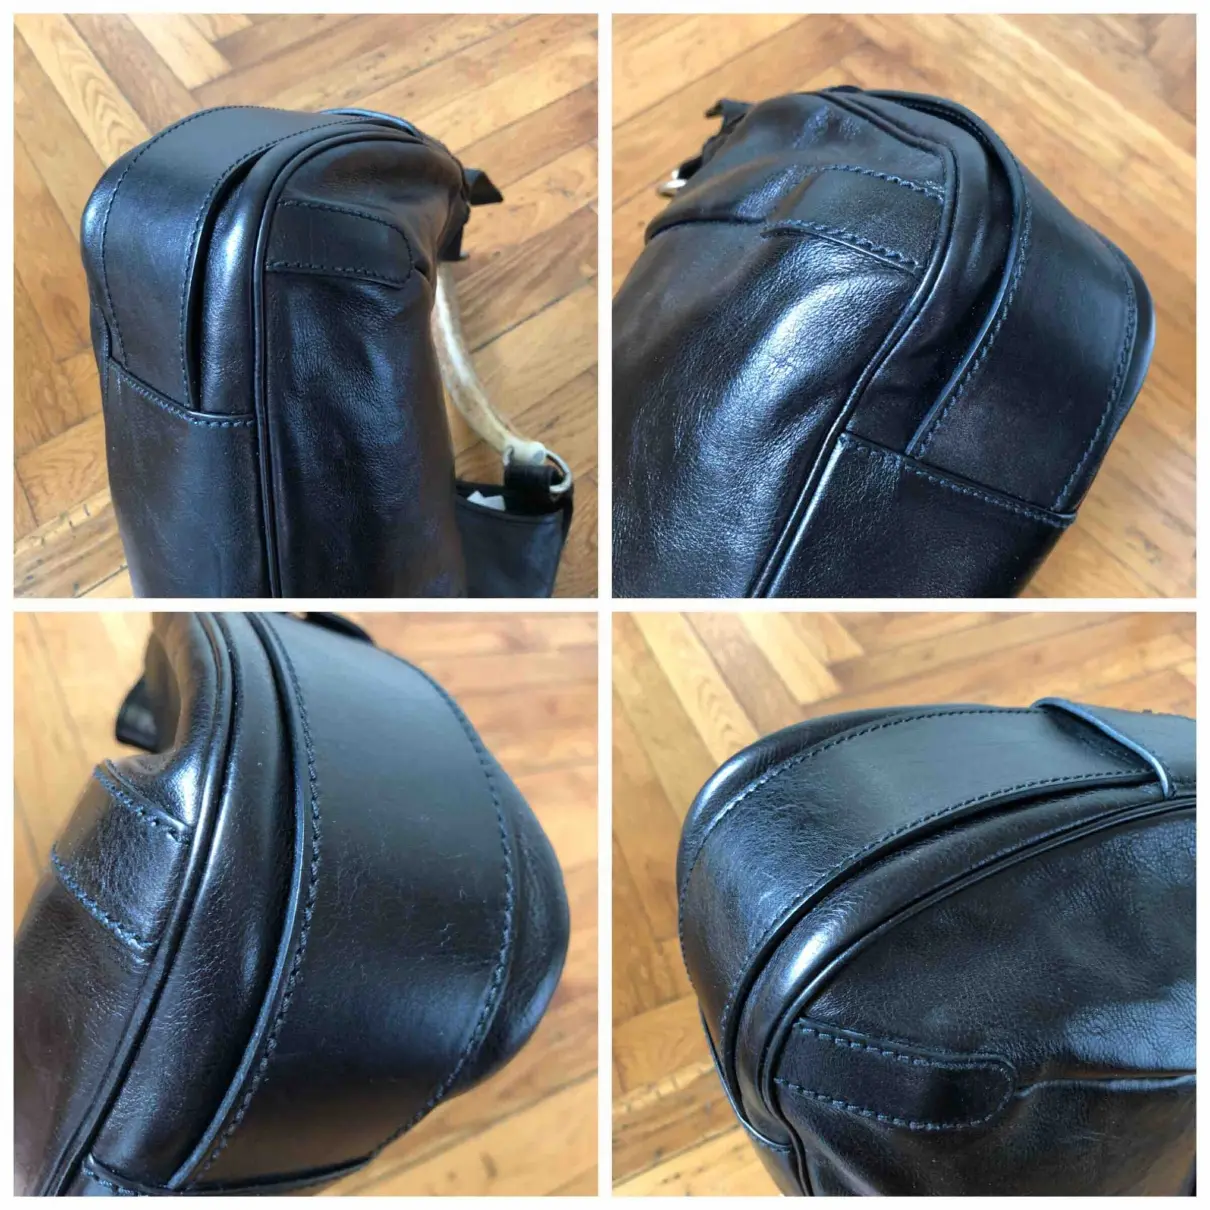 Yves Saint Laurent Mombasa leather handbag for sale